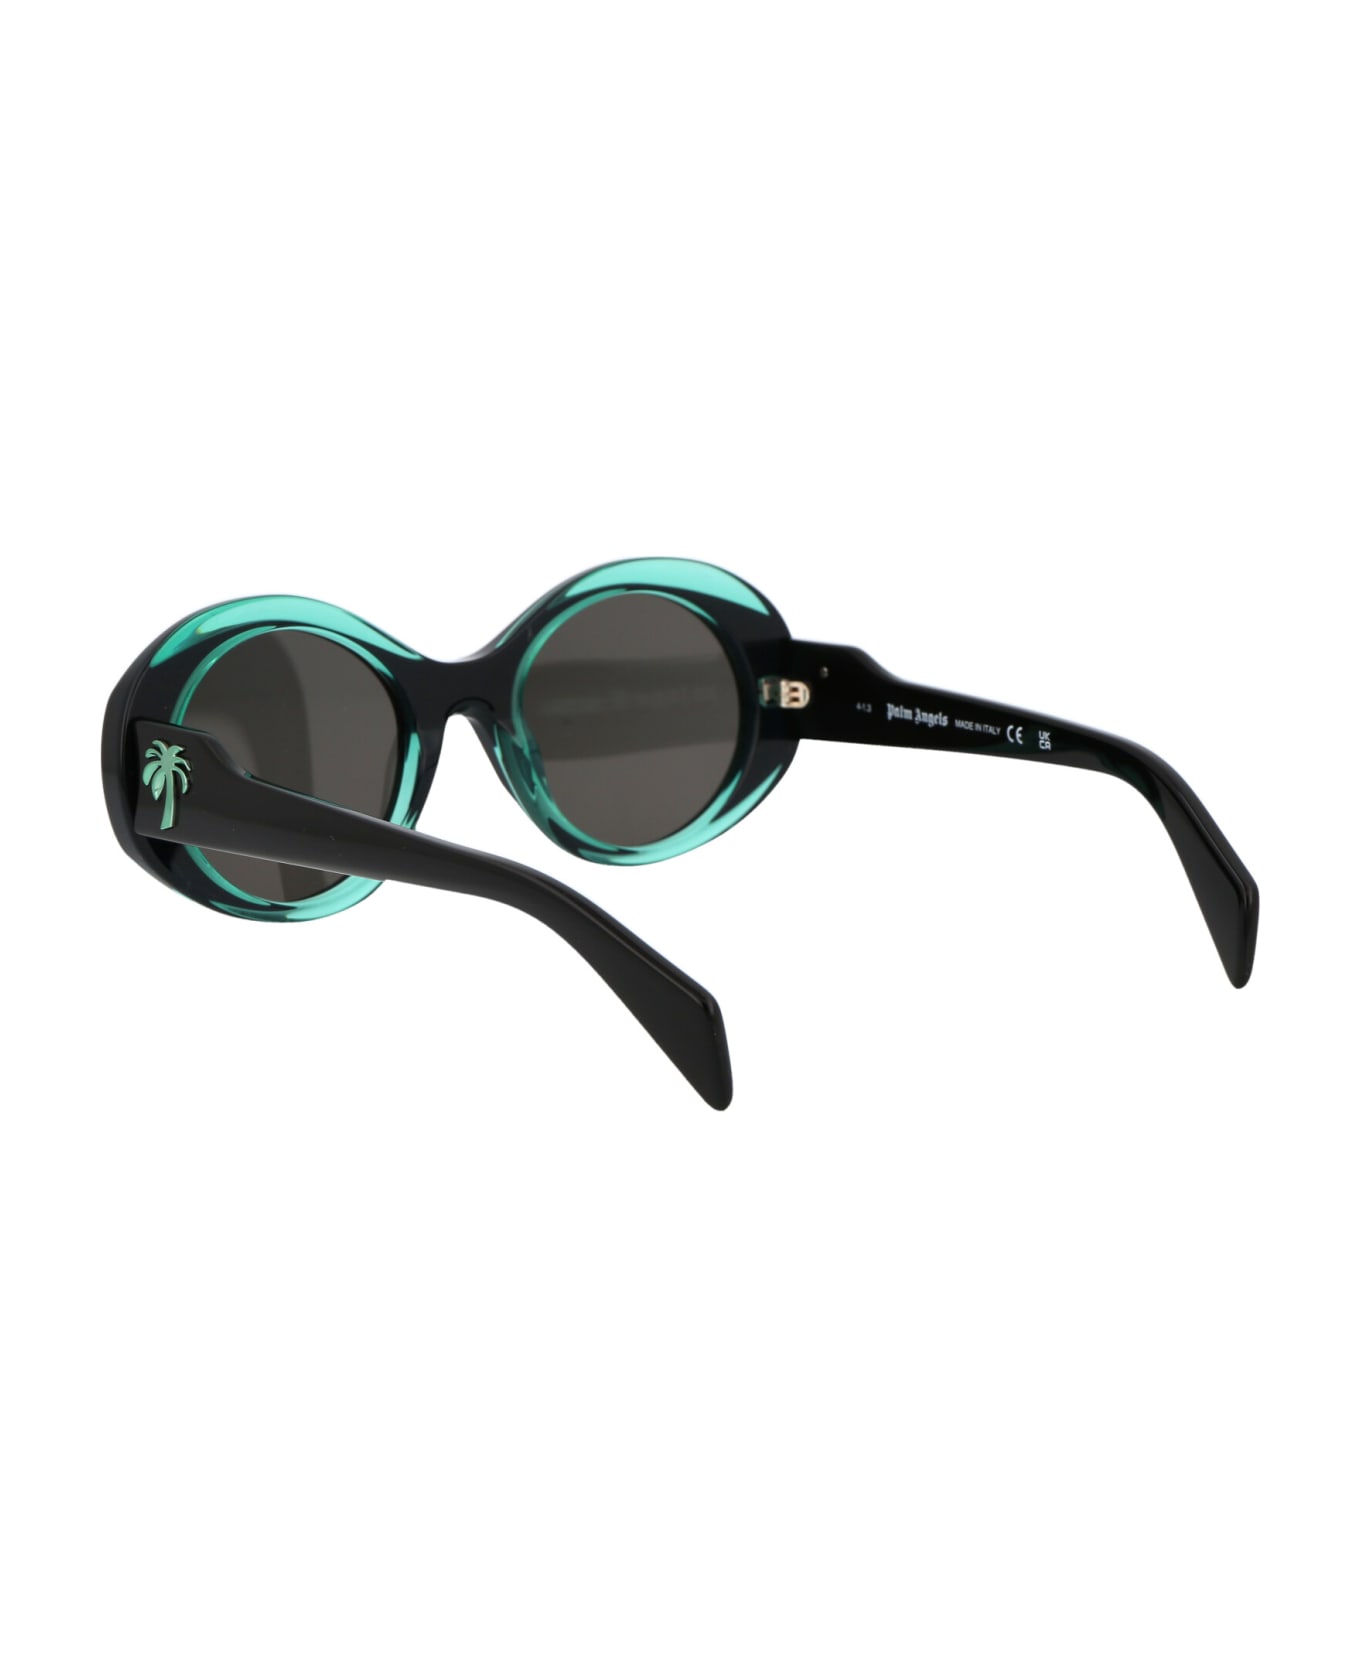 Palm Angels Doyle Crystal Sunglasses Moschino - 5407 tortoise arm square sunglasses